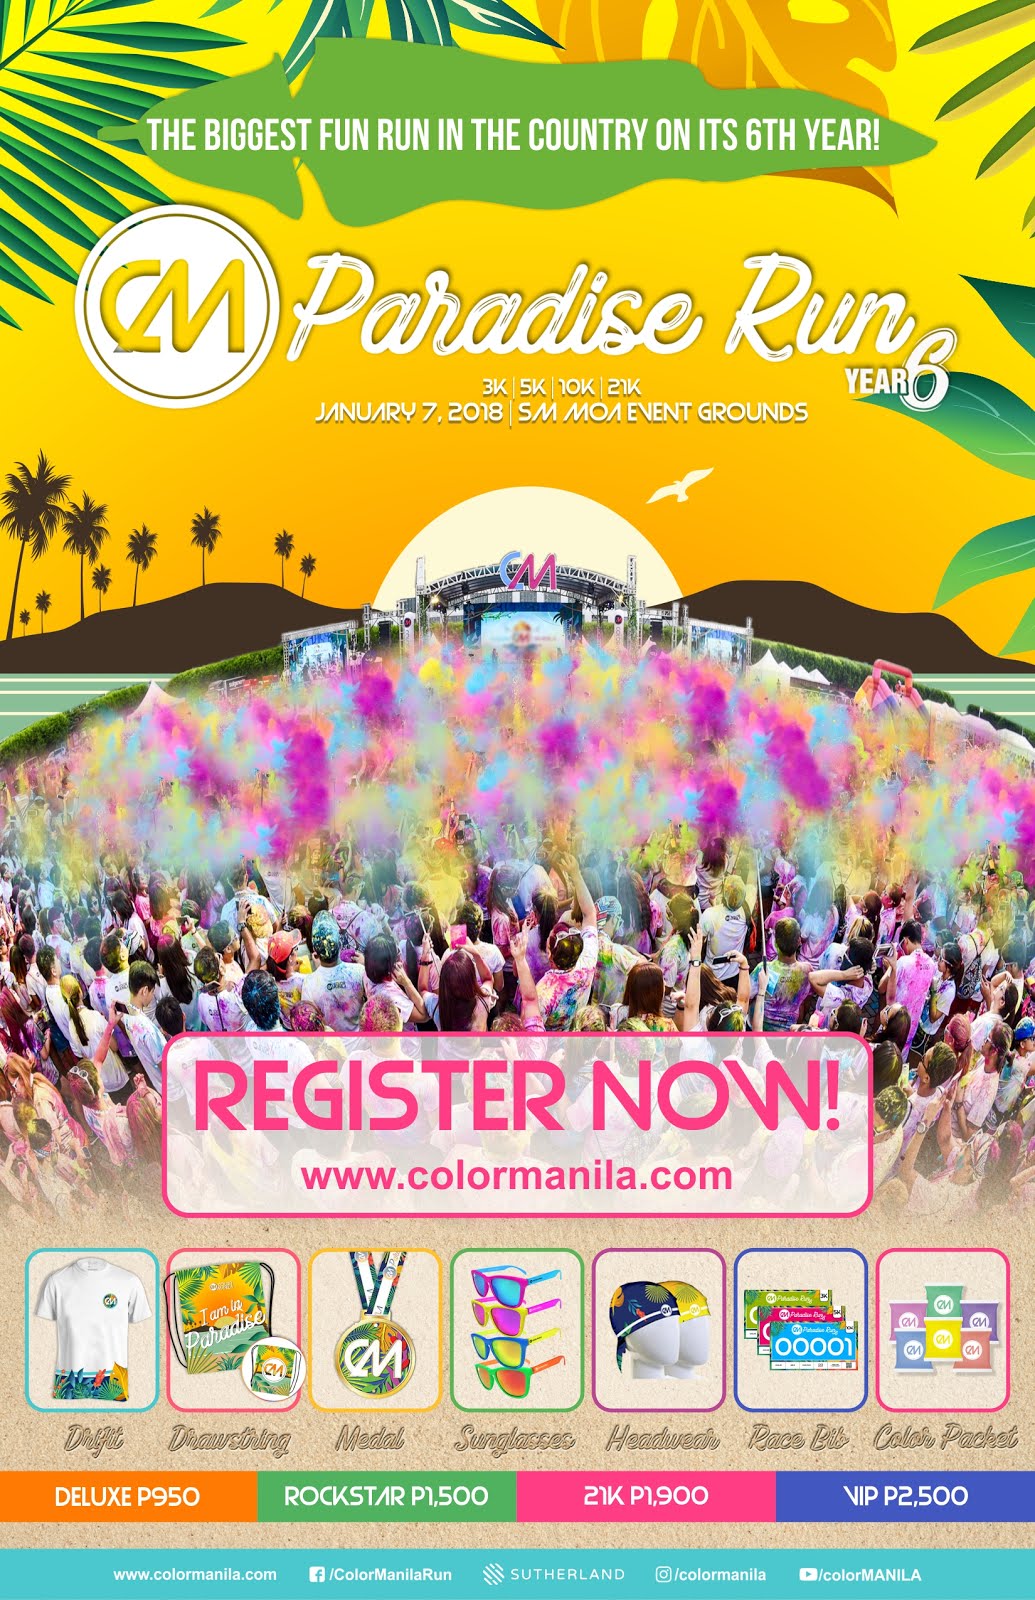 Color Manila Paradise Run Clark / Laoag / Laguna